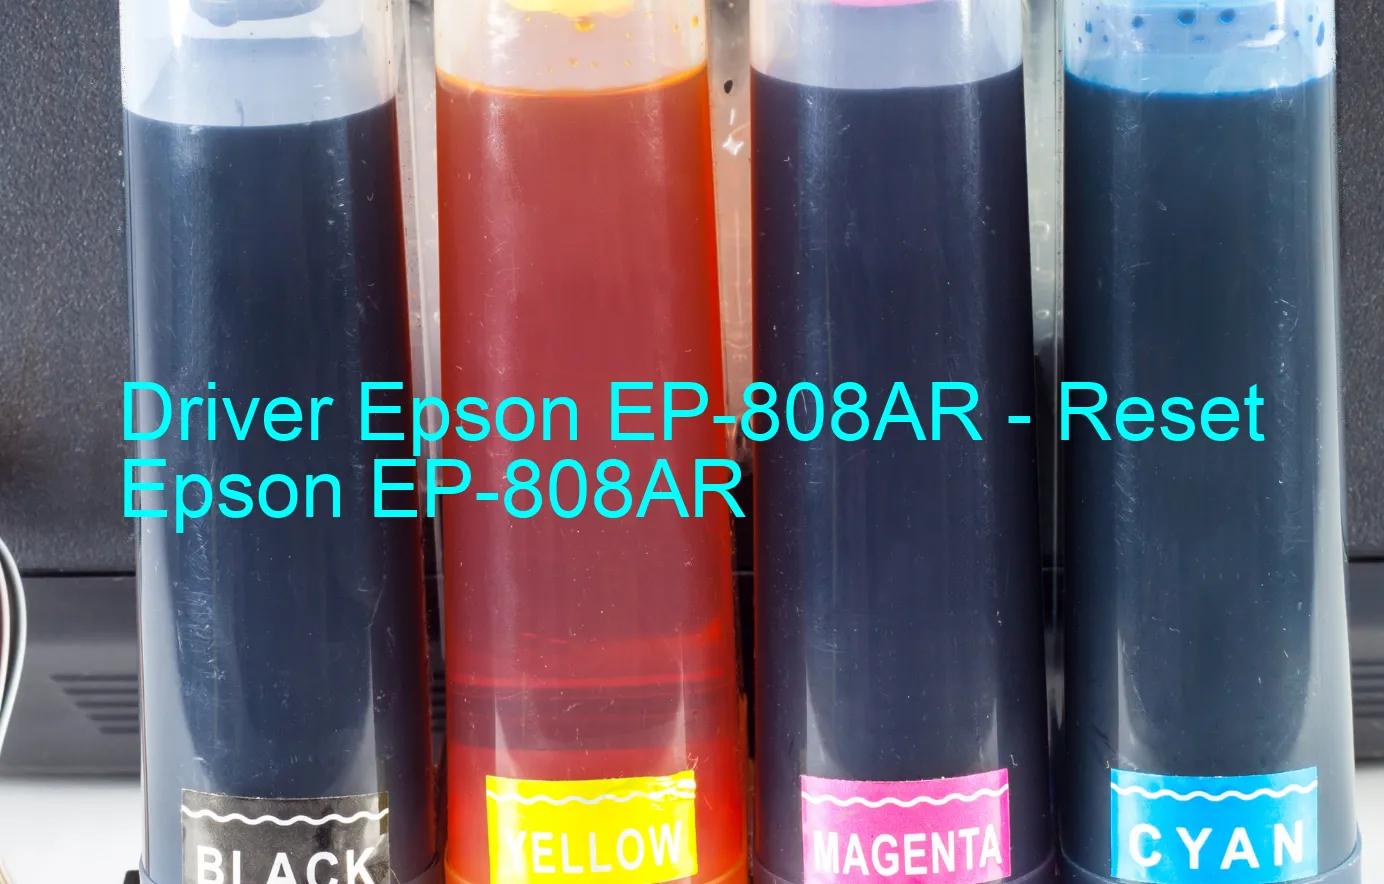 Epson EP-808ARのドライバー、Epson EP-808ARのリセットソフトウェア